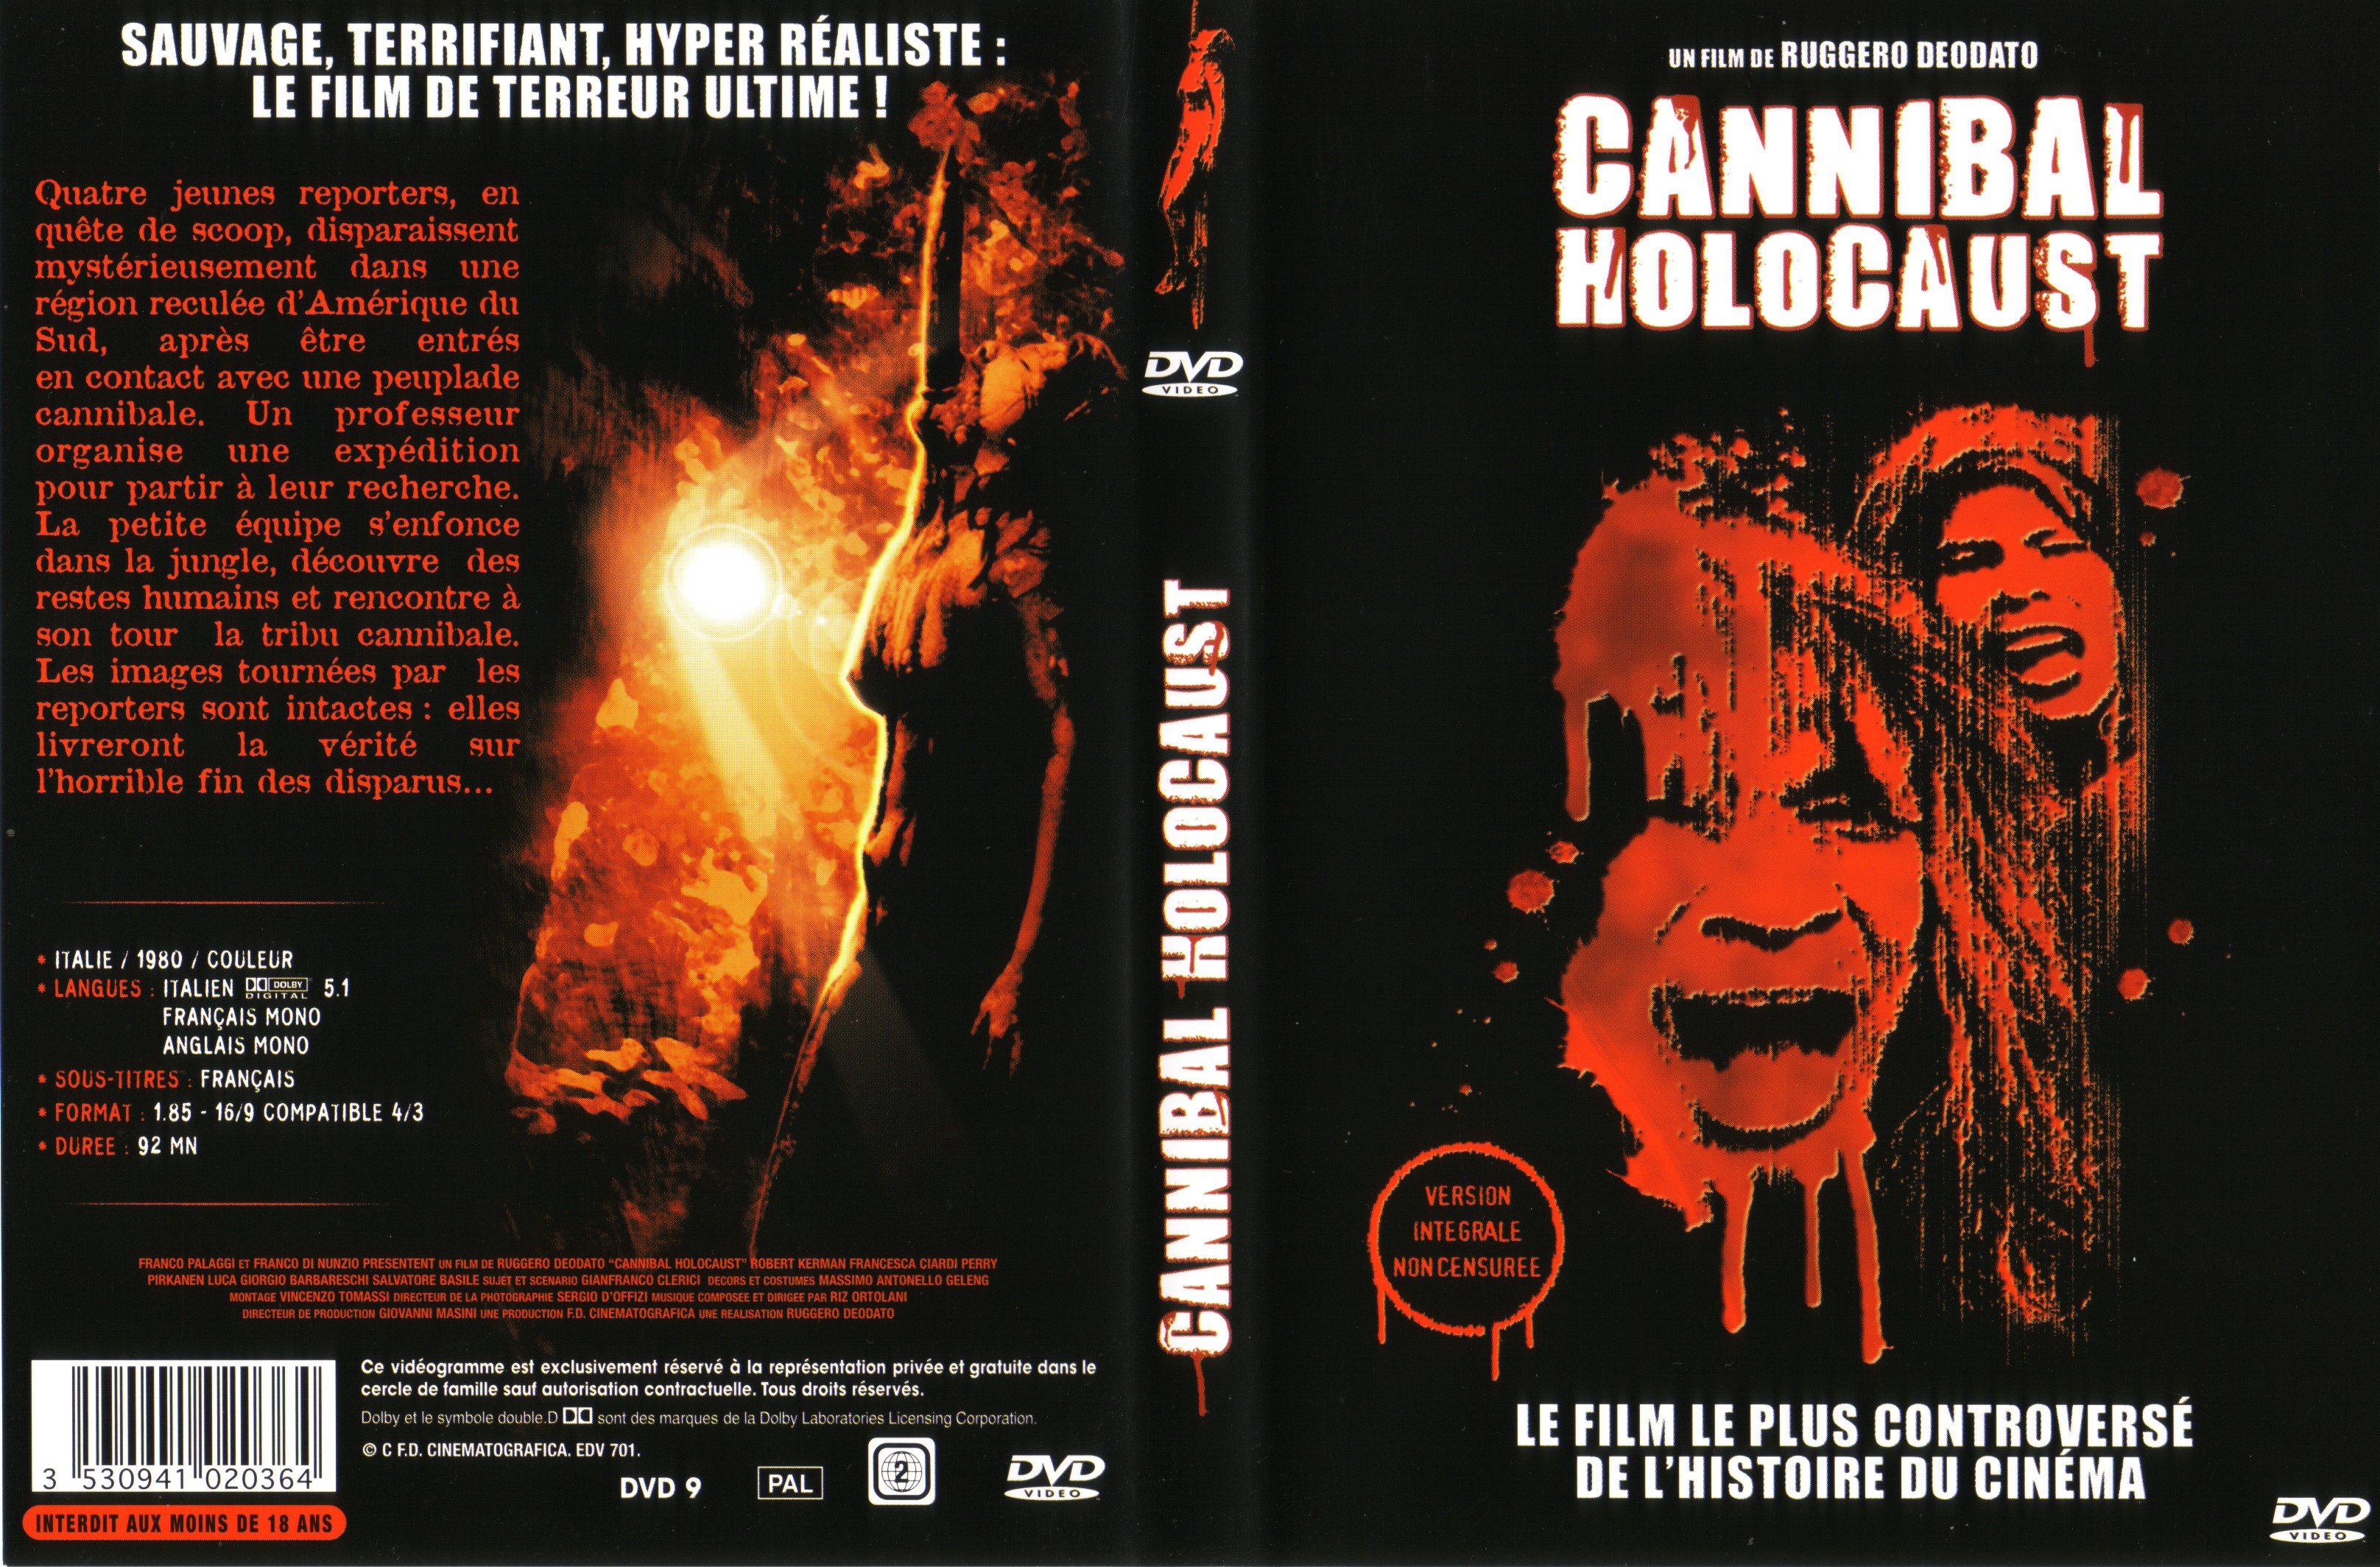 Jaquette DVD Cannibal holocaust